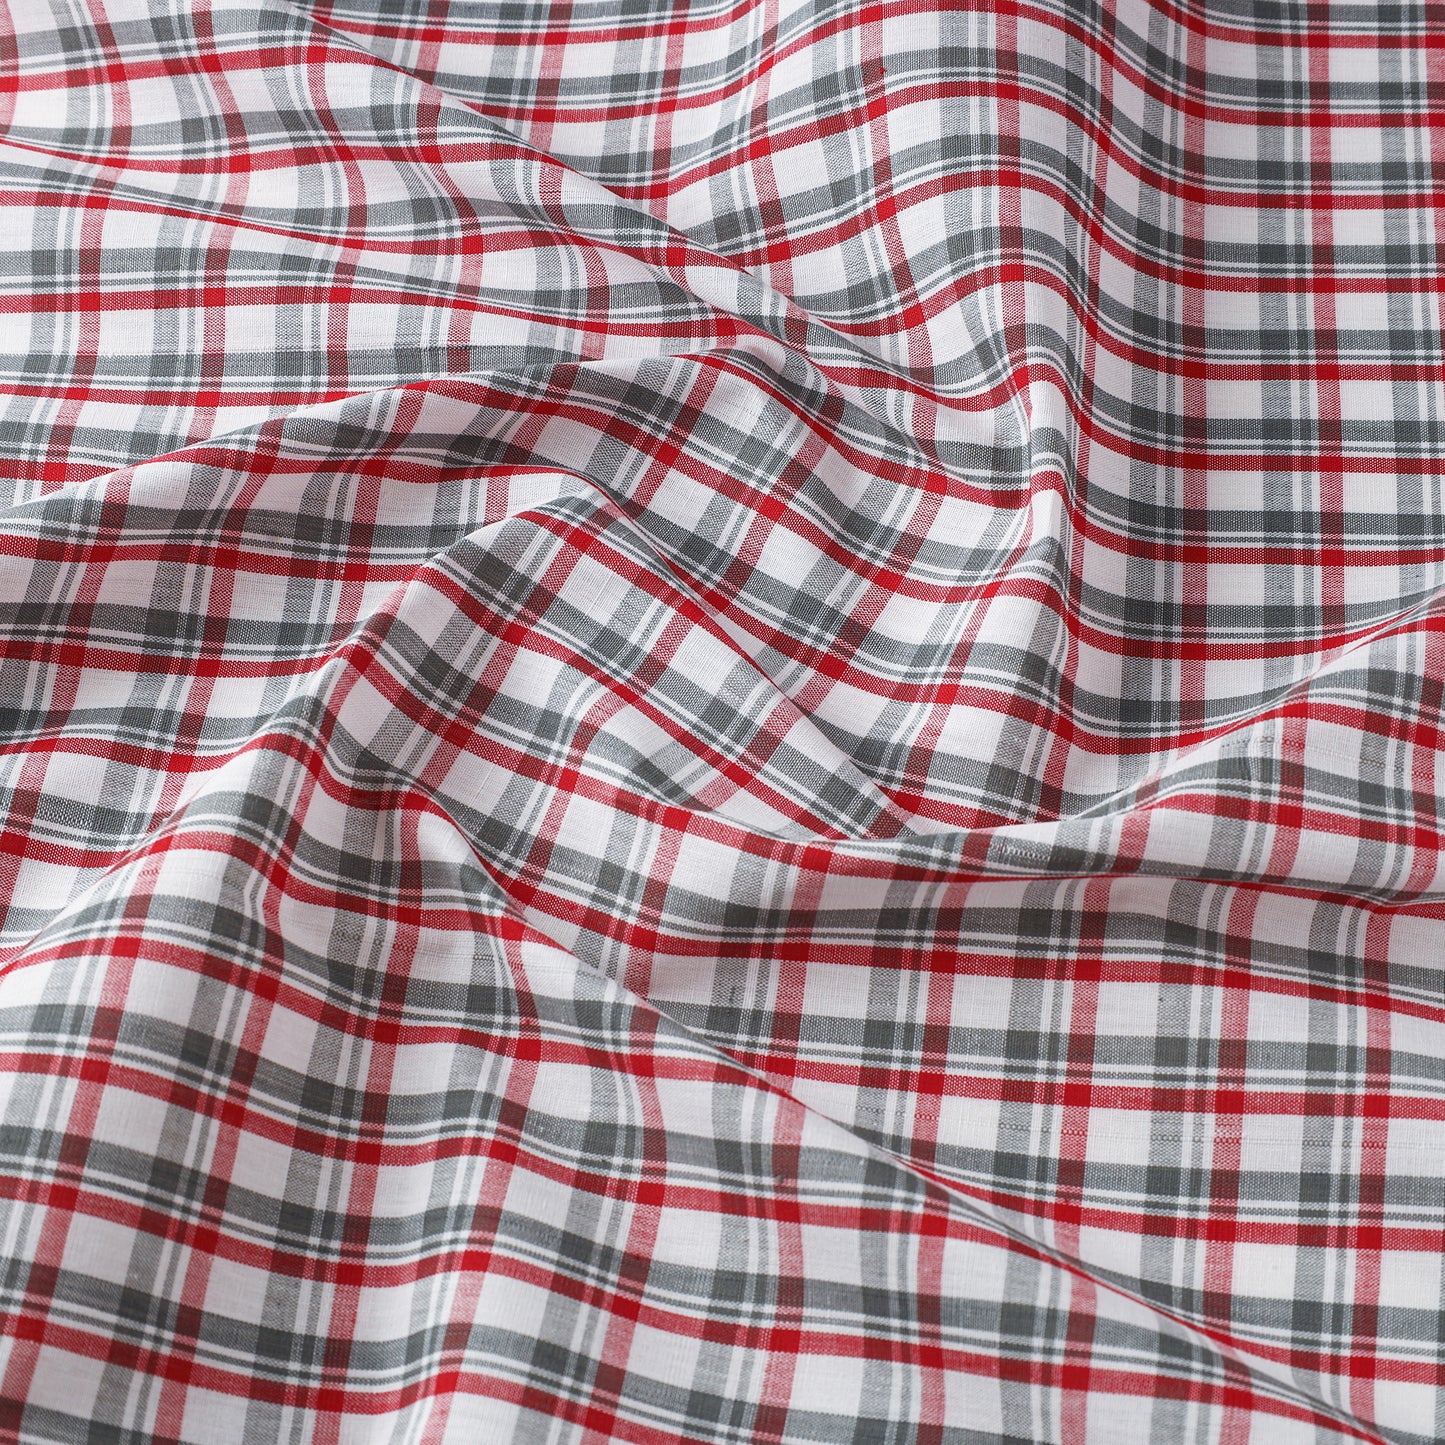 Mangalagiri Handloom Checks Cotton Fabric